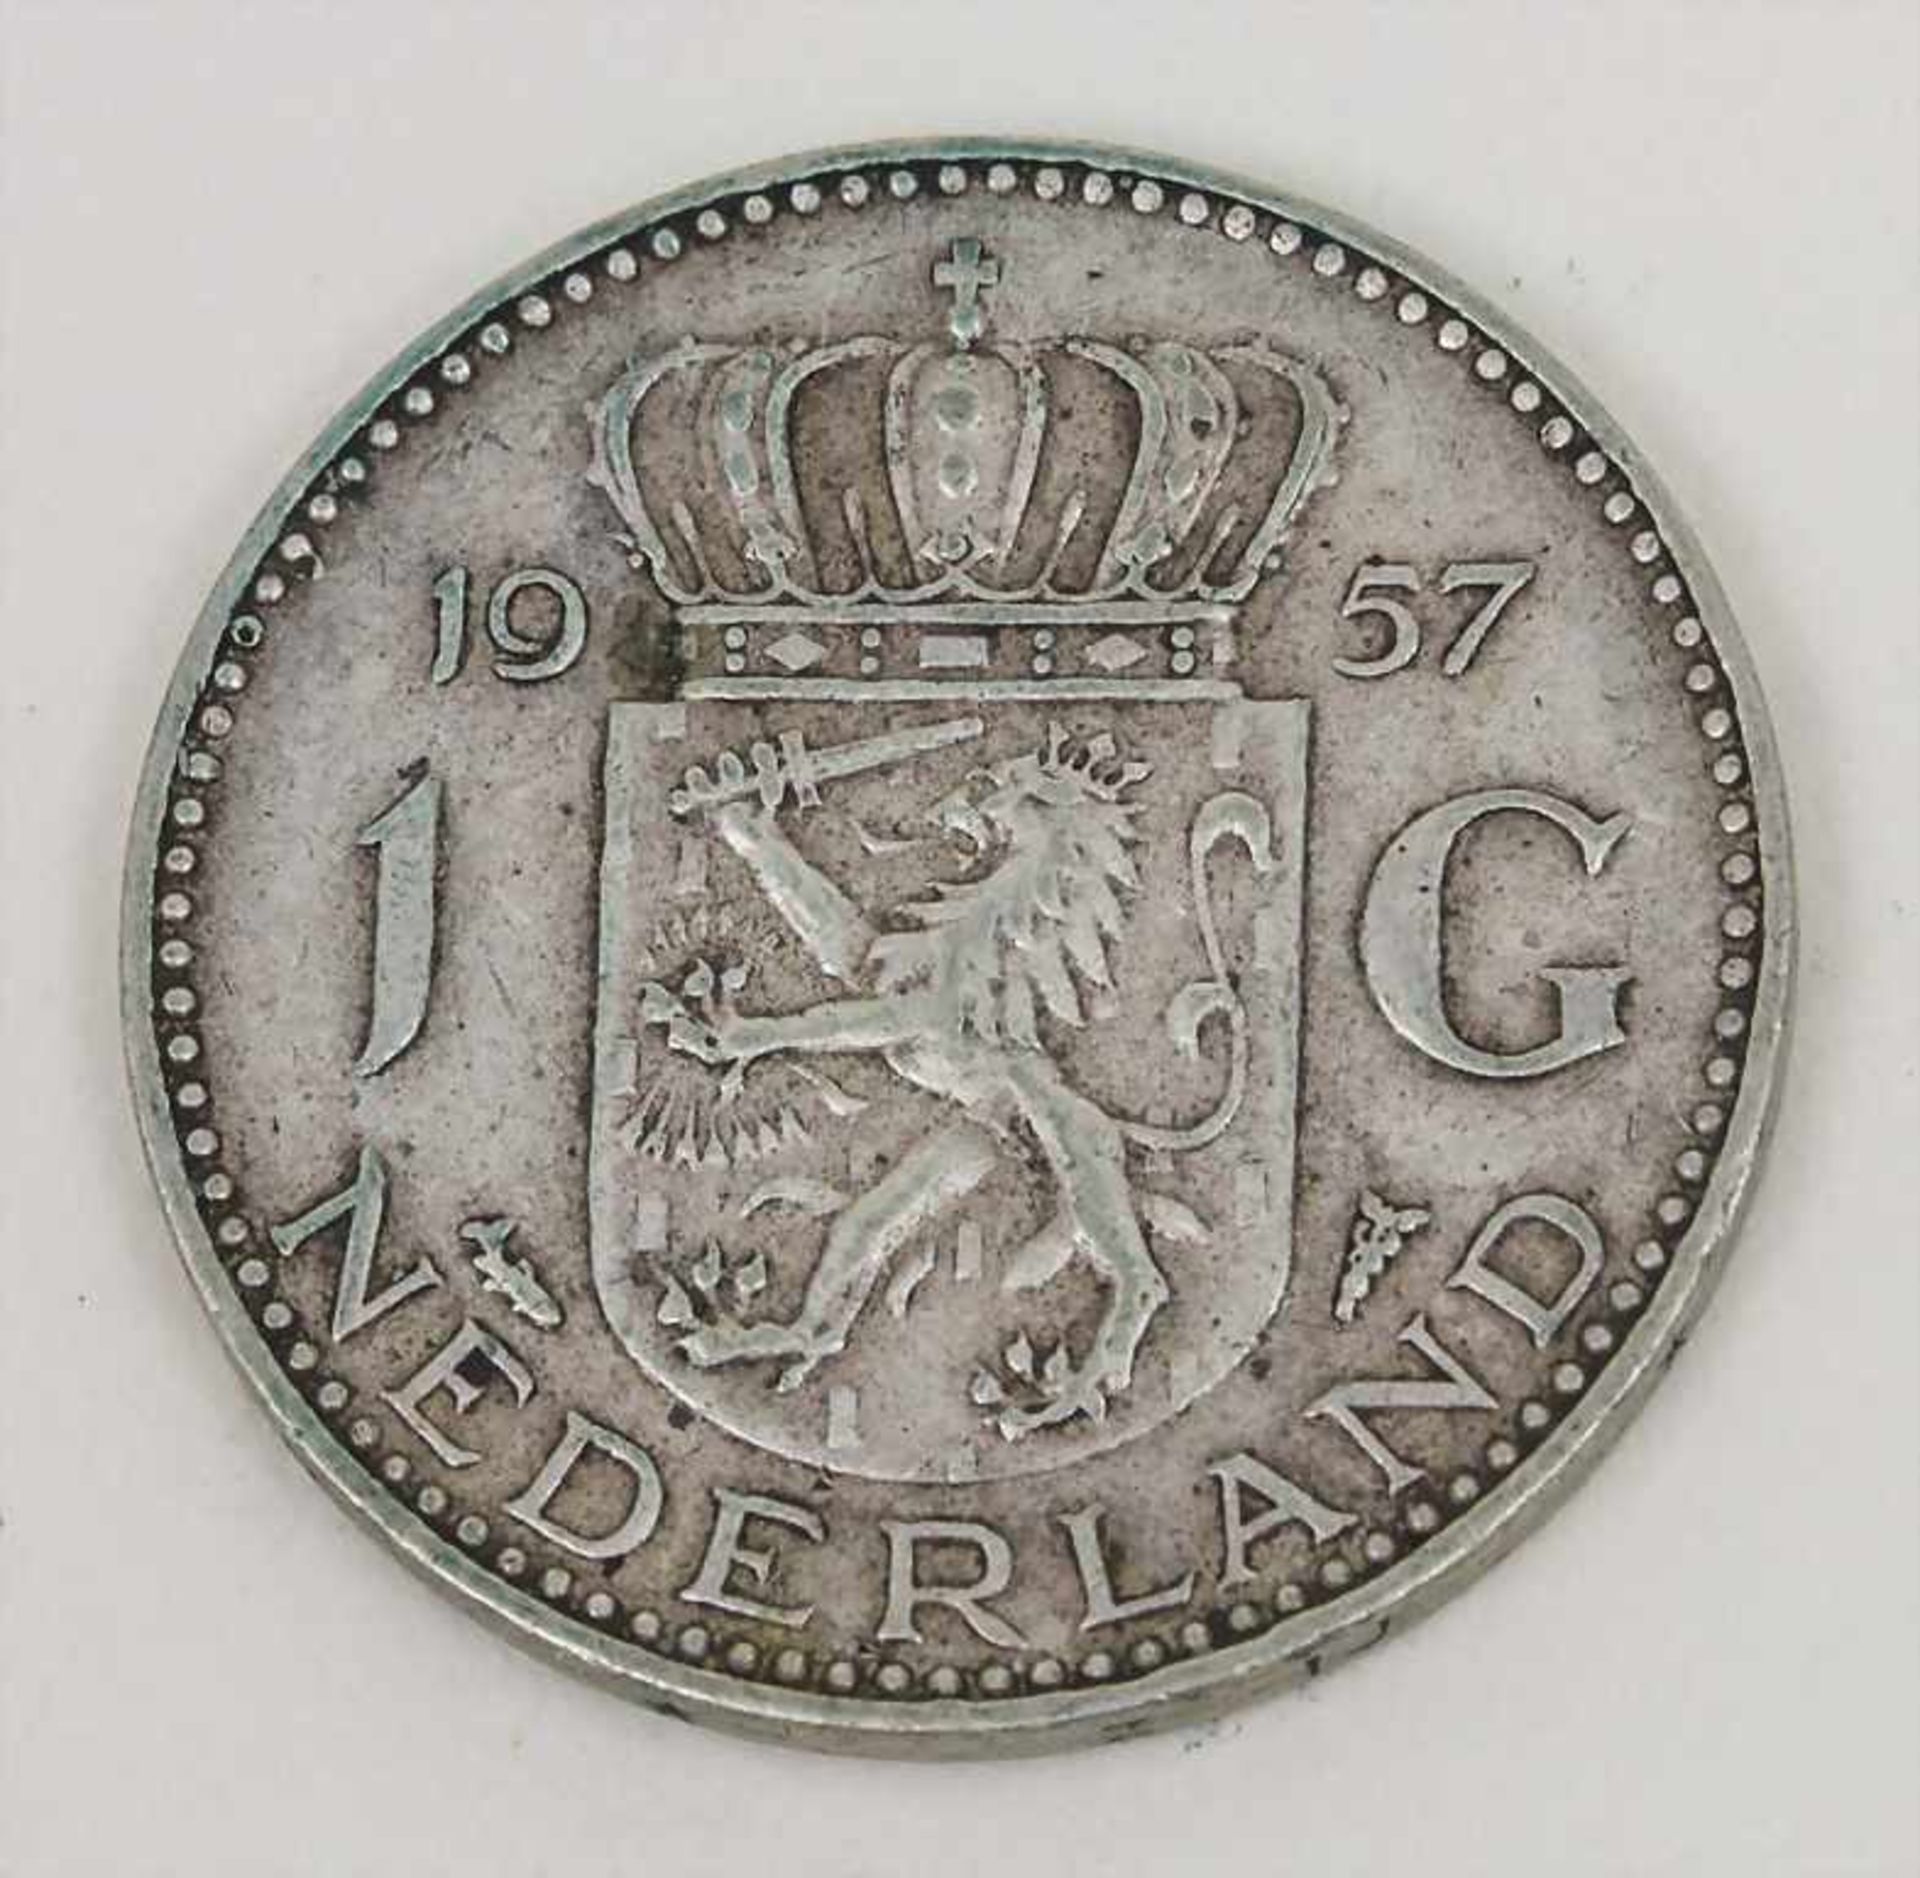 Sammlung 200 1-Gulden Münzen / A collection of 200 1-guilder coins, 1950-1960 Material: Silber, - Bild 3 aus 3